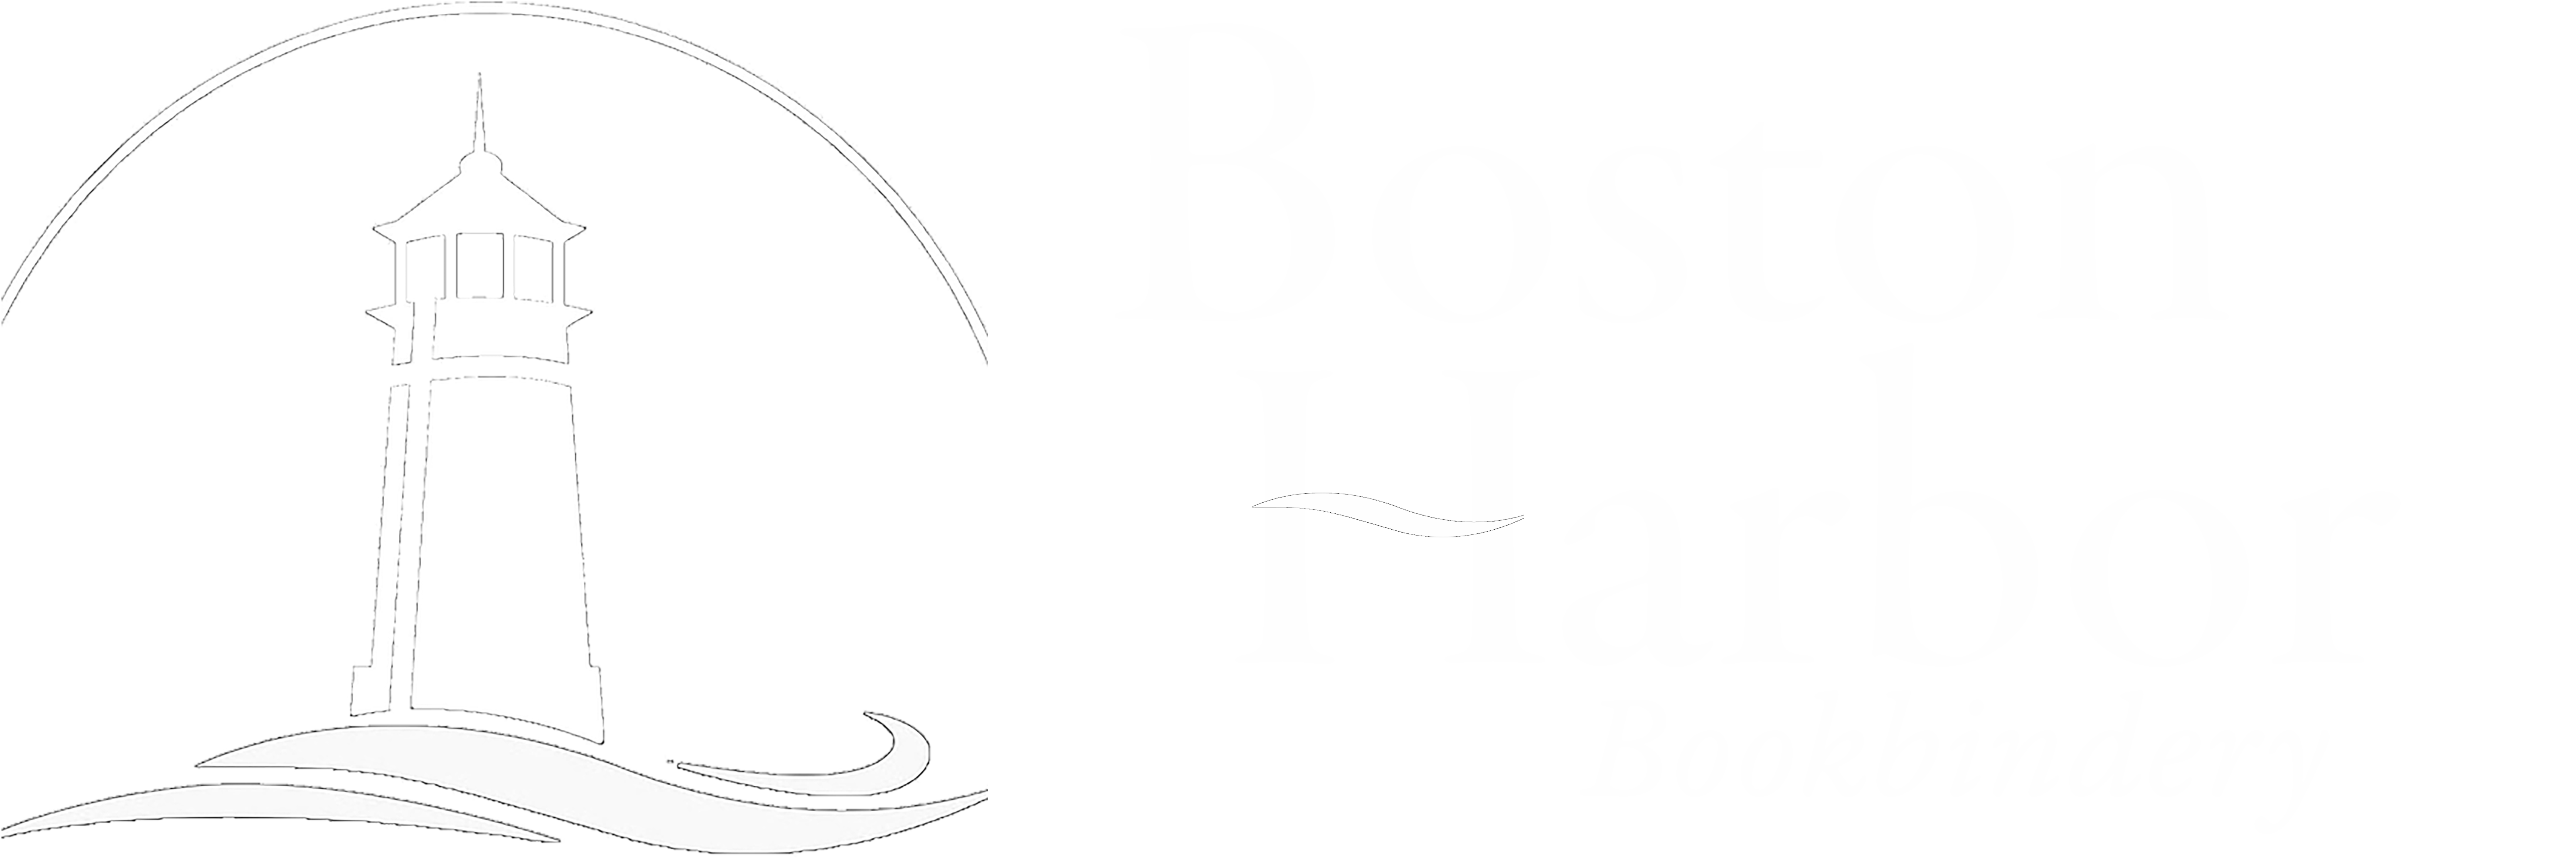 Boston Harbor Book Bindery